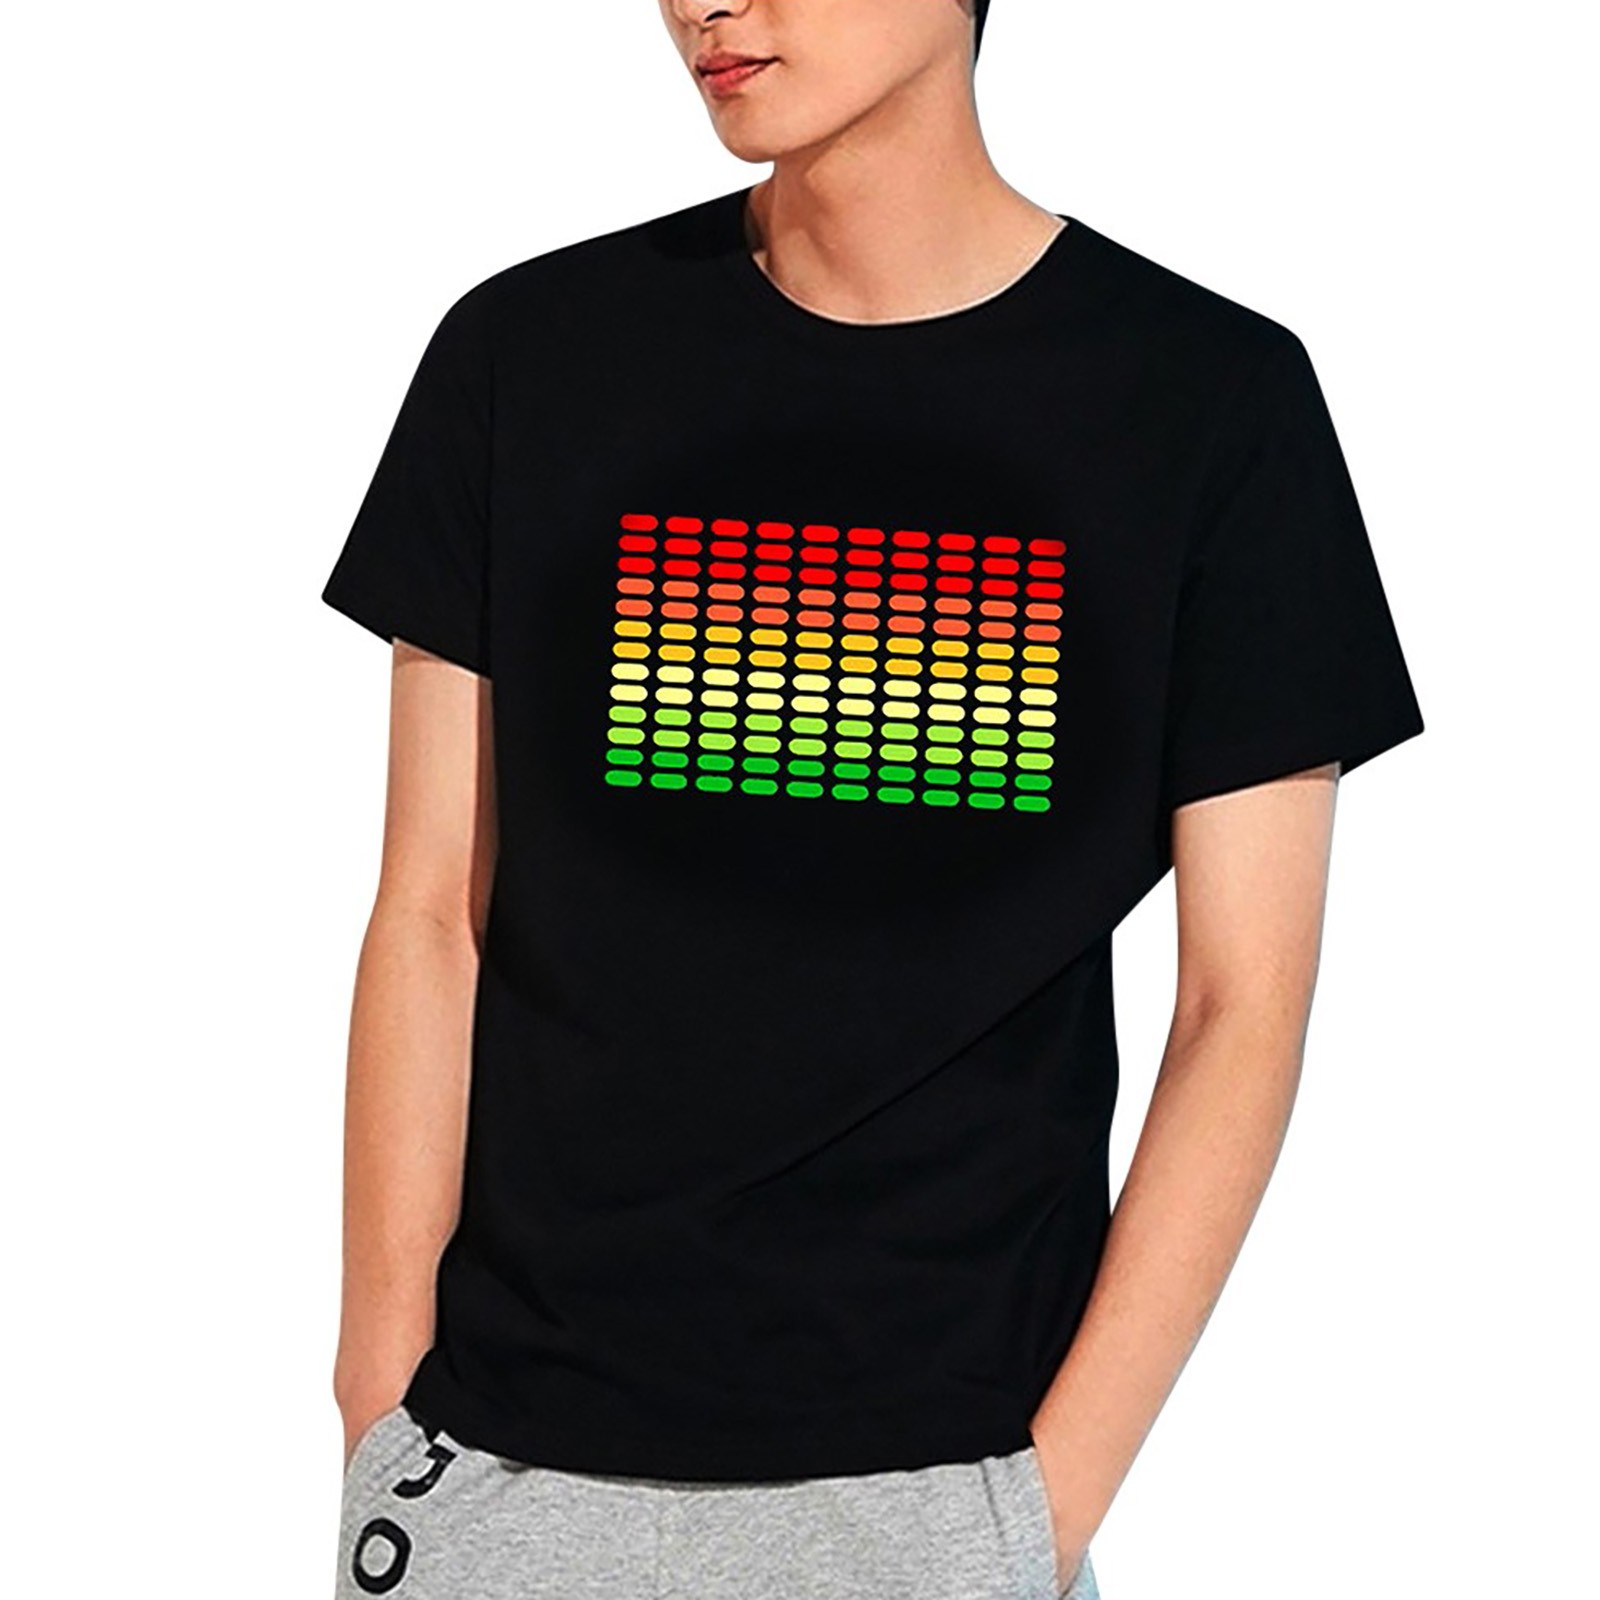 CAMERIARIO Mens Shirt, Short Sleeve, Color Print, LED, Men Party Disco ...